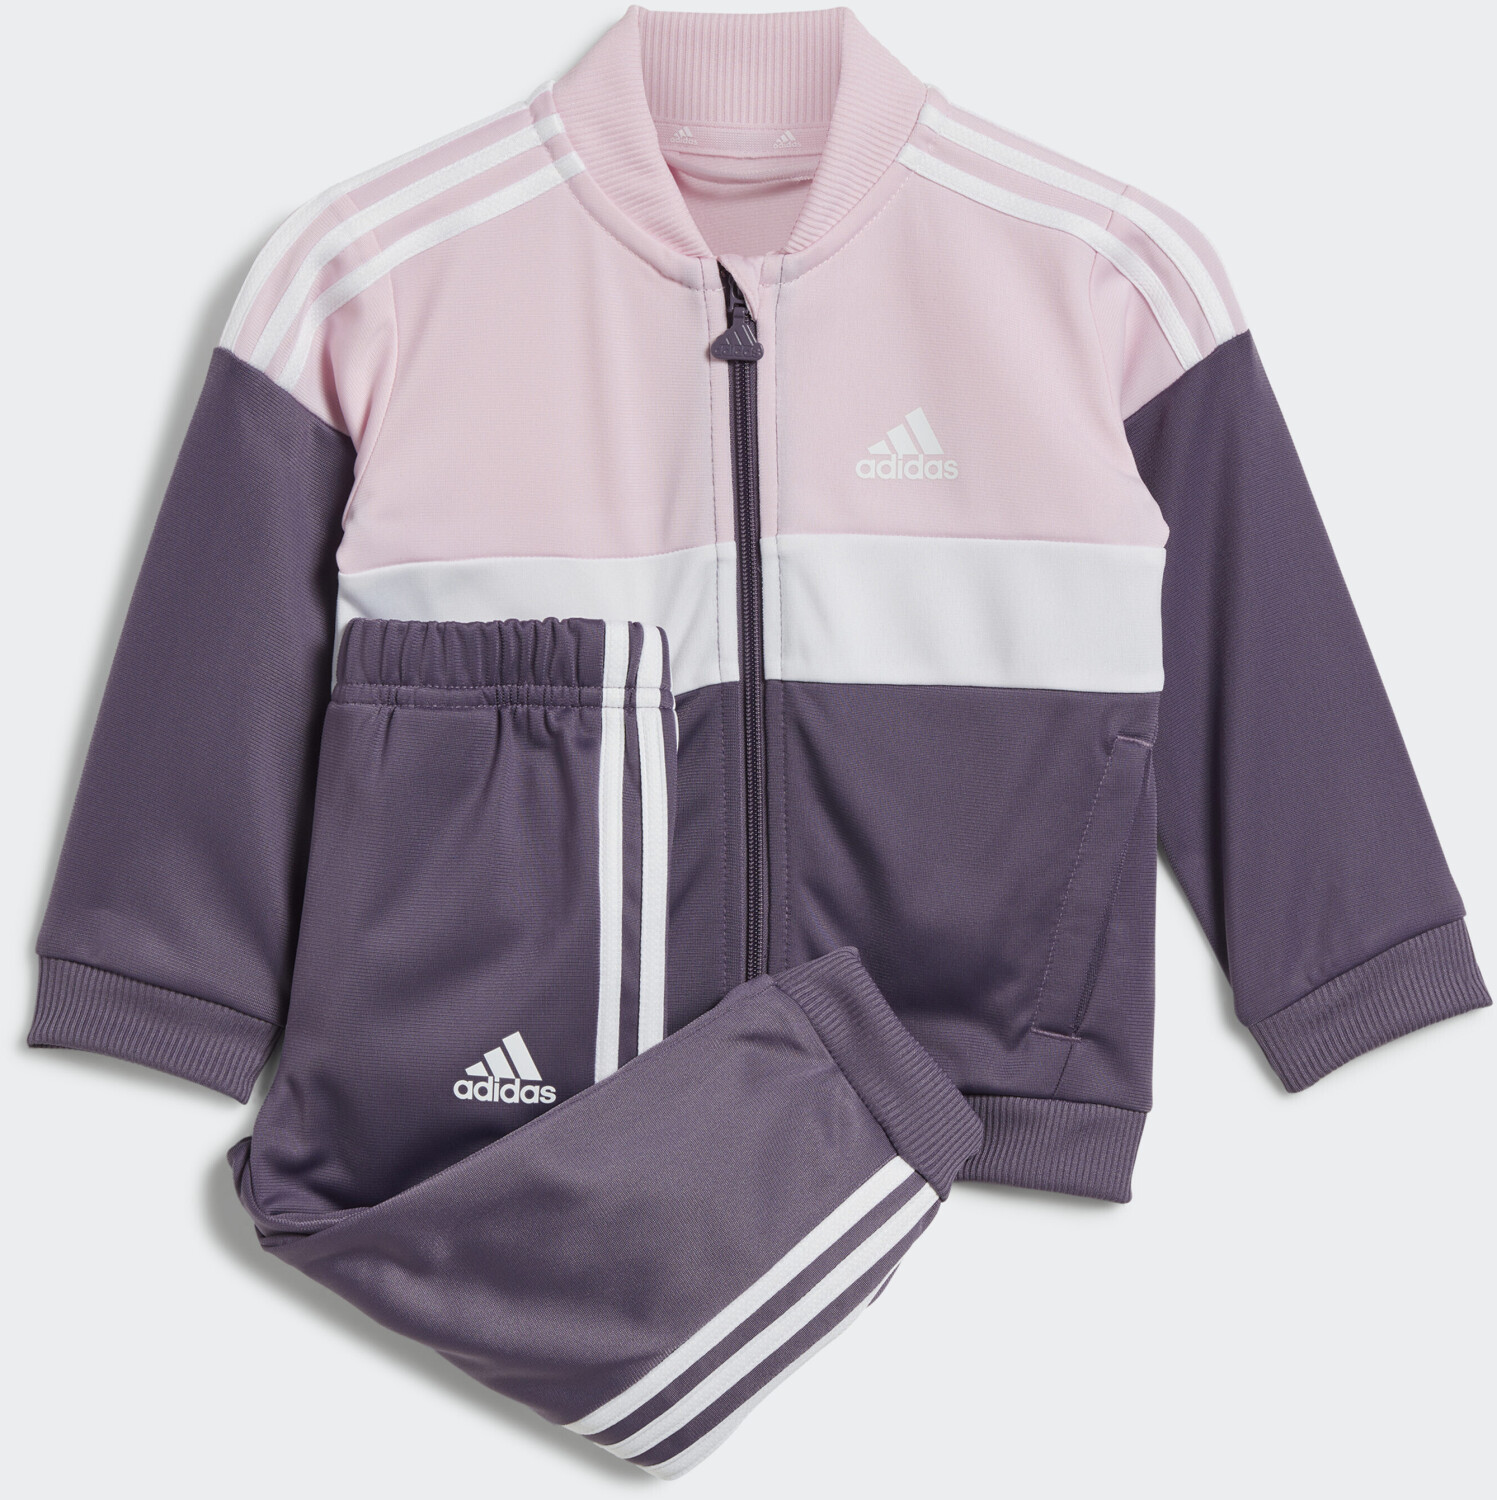 Adidas Kids Tiberio 3-Stripes Colorblock Shiny Kids Track Suit Clear pink/white/shadow  violet (IJ6333) ab 44,99 € | Preisvergleich bei